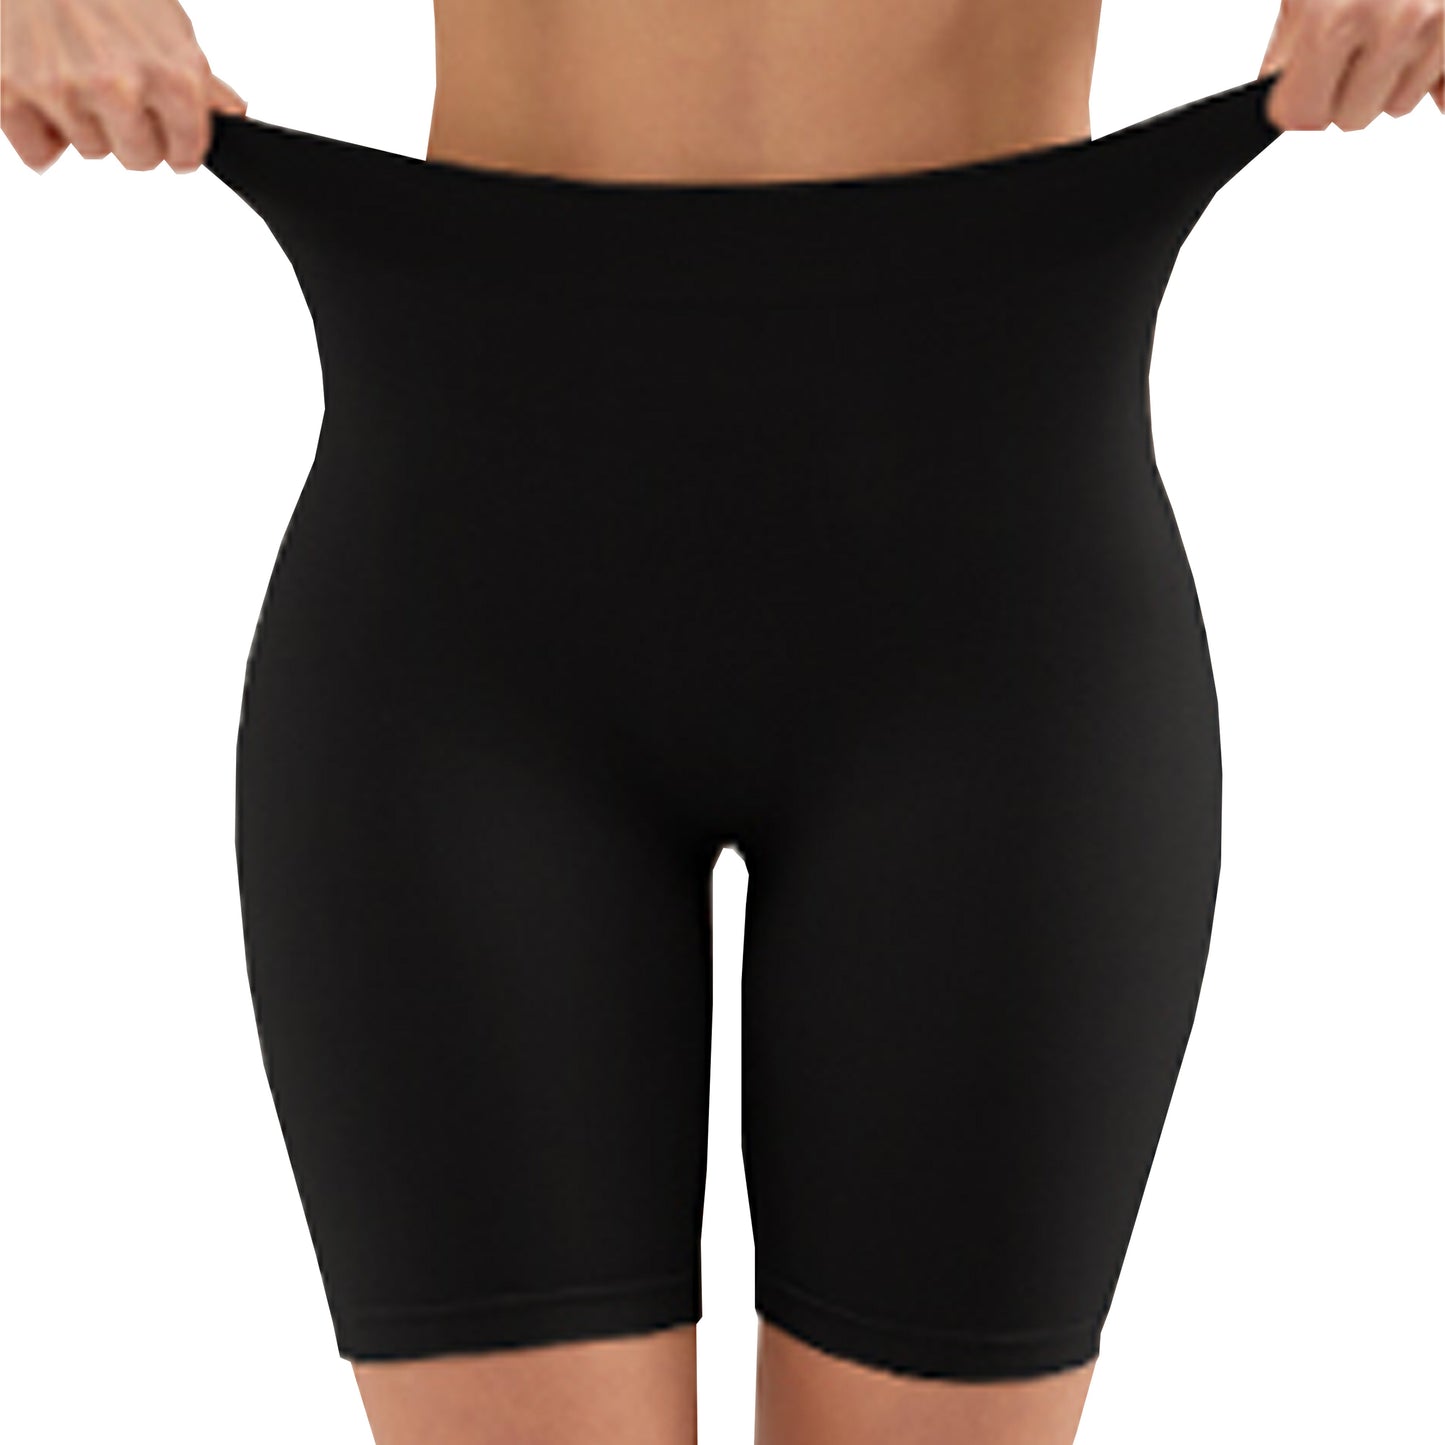 Chub Rub Shorts - 2 Pack - Black & Nude